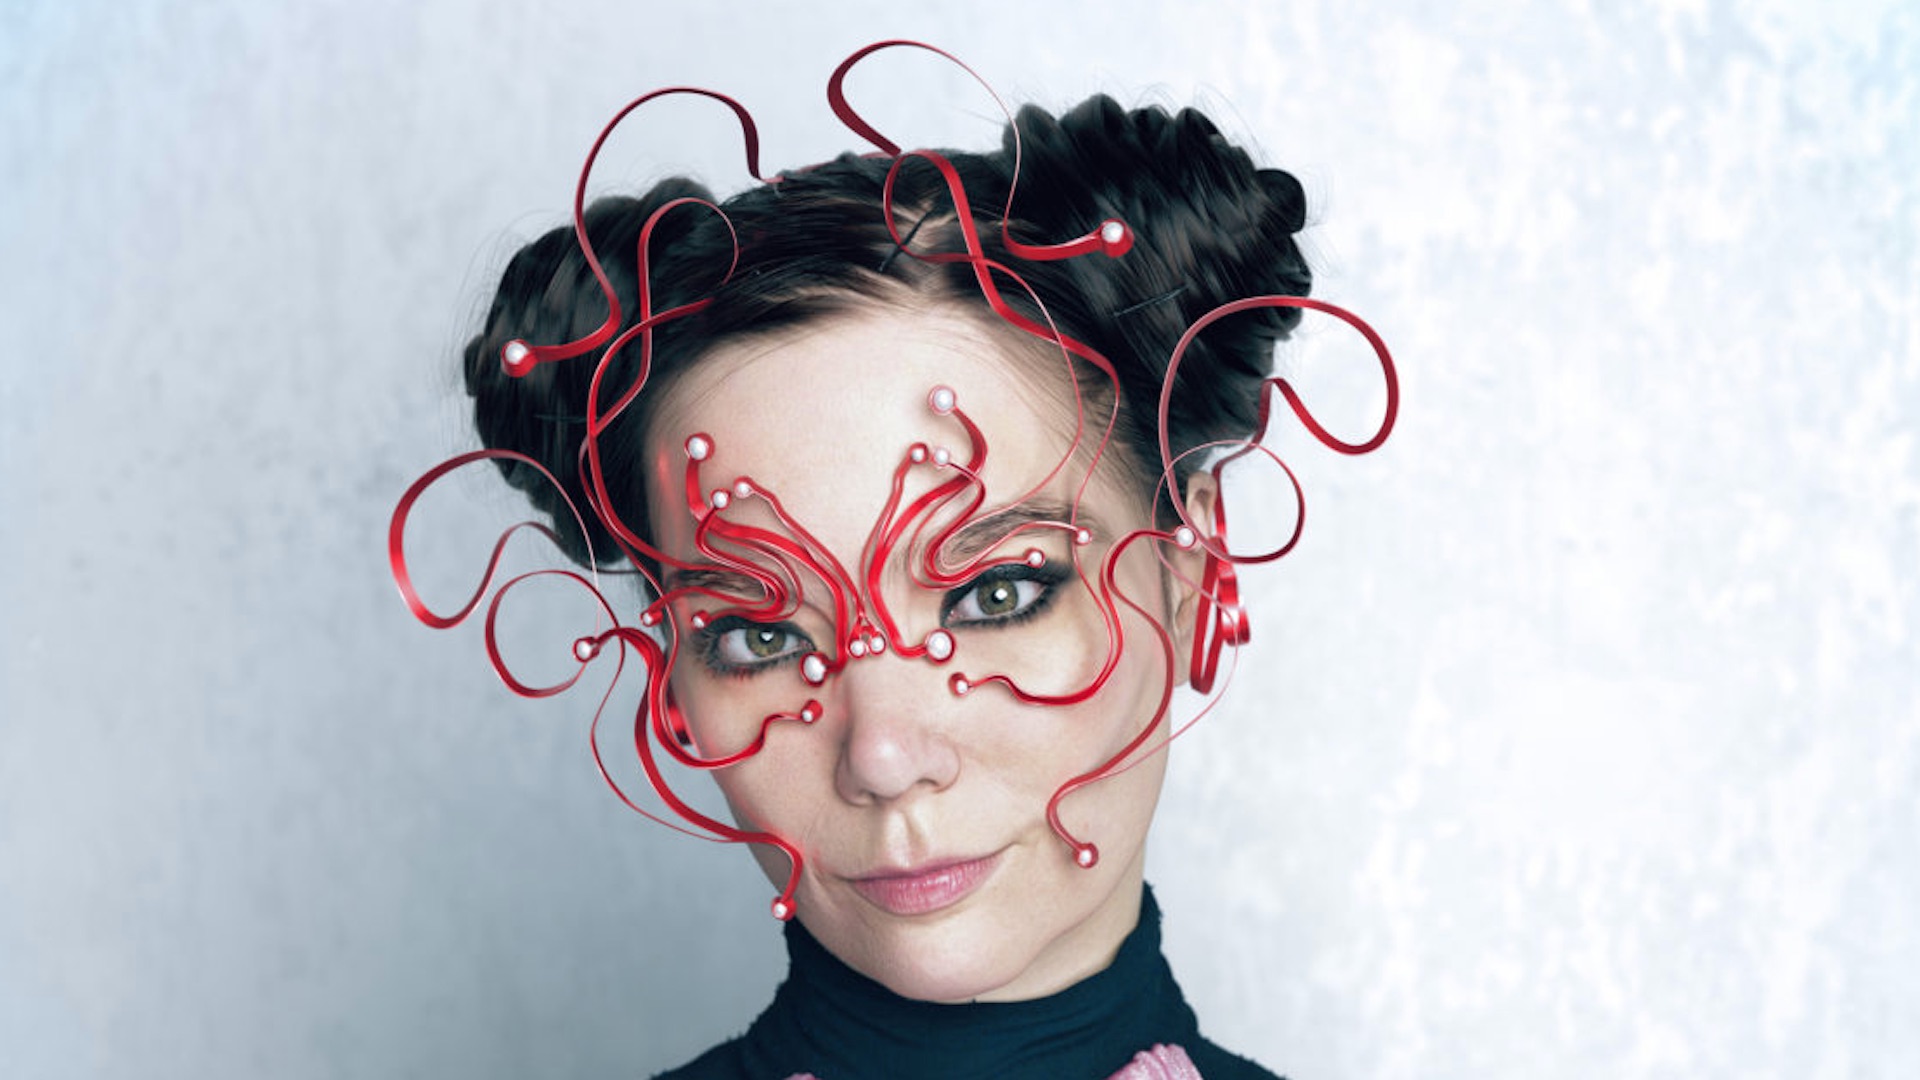  Björk Lanza un Video Animado para “Victimhood”